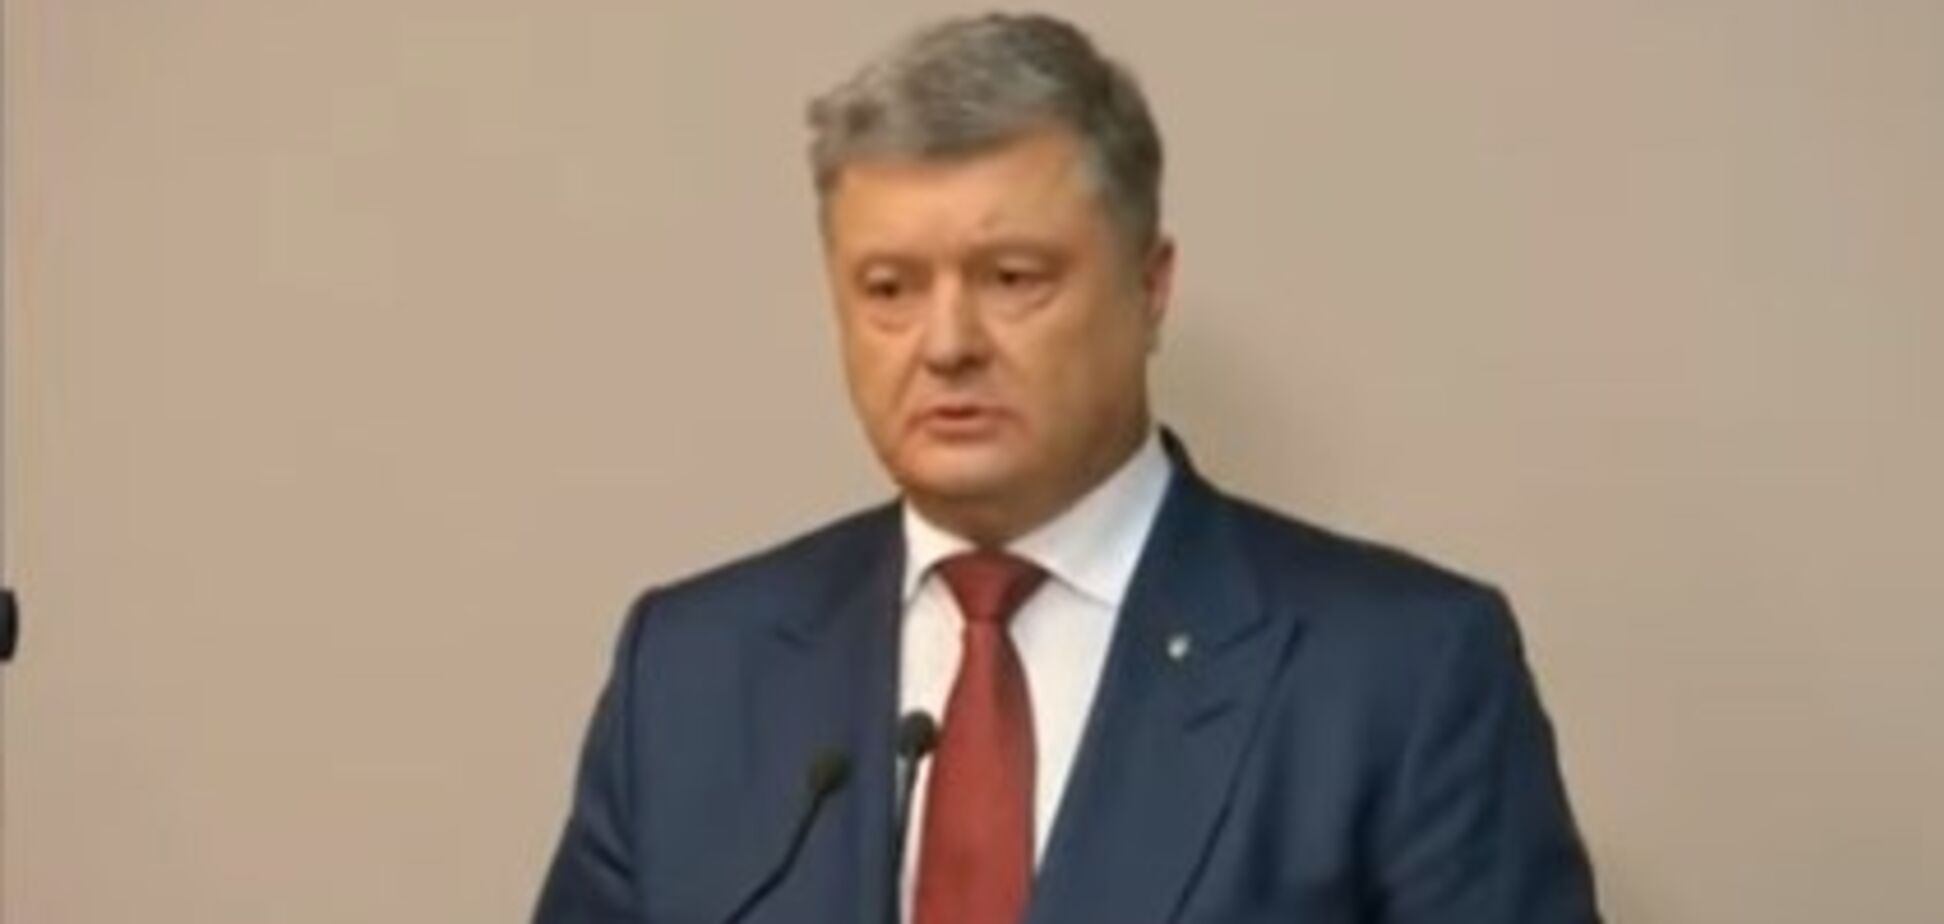 Рада не припиняла повноважень президента Януковича - Порошенко